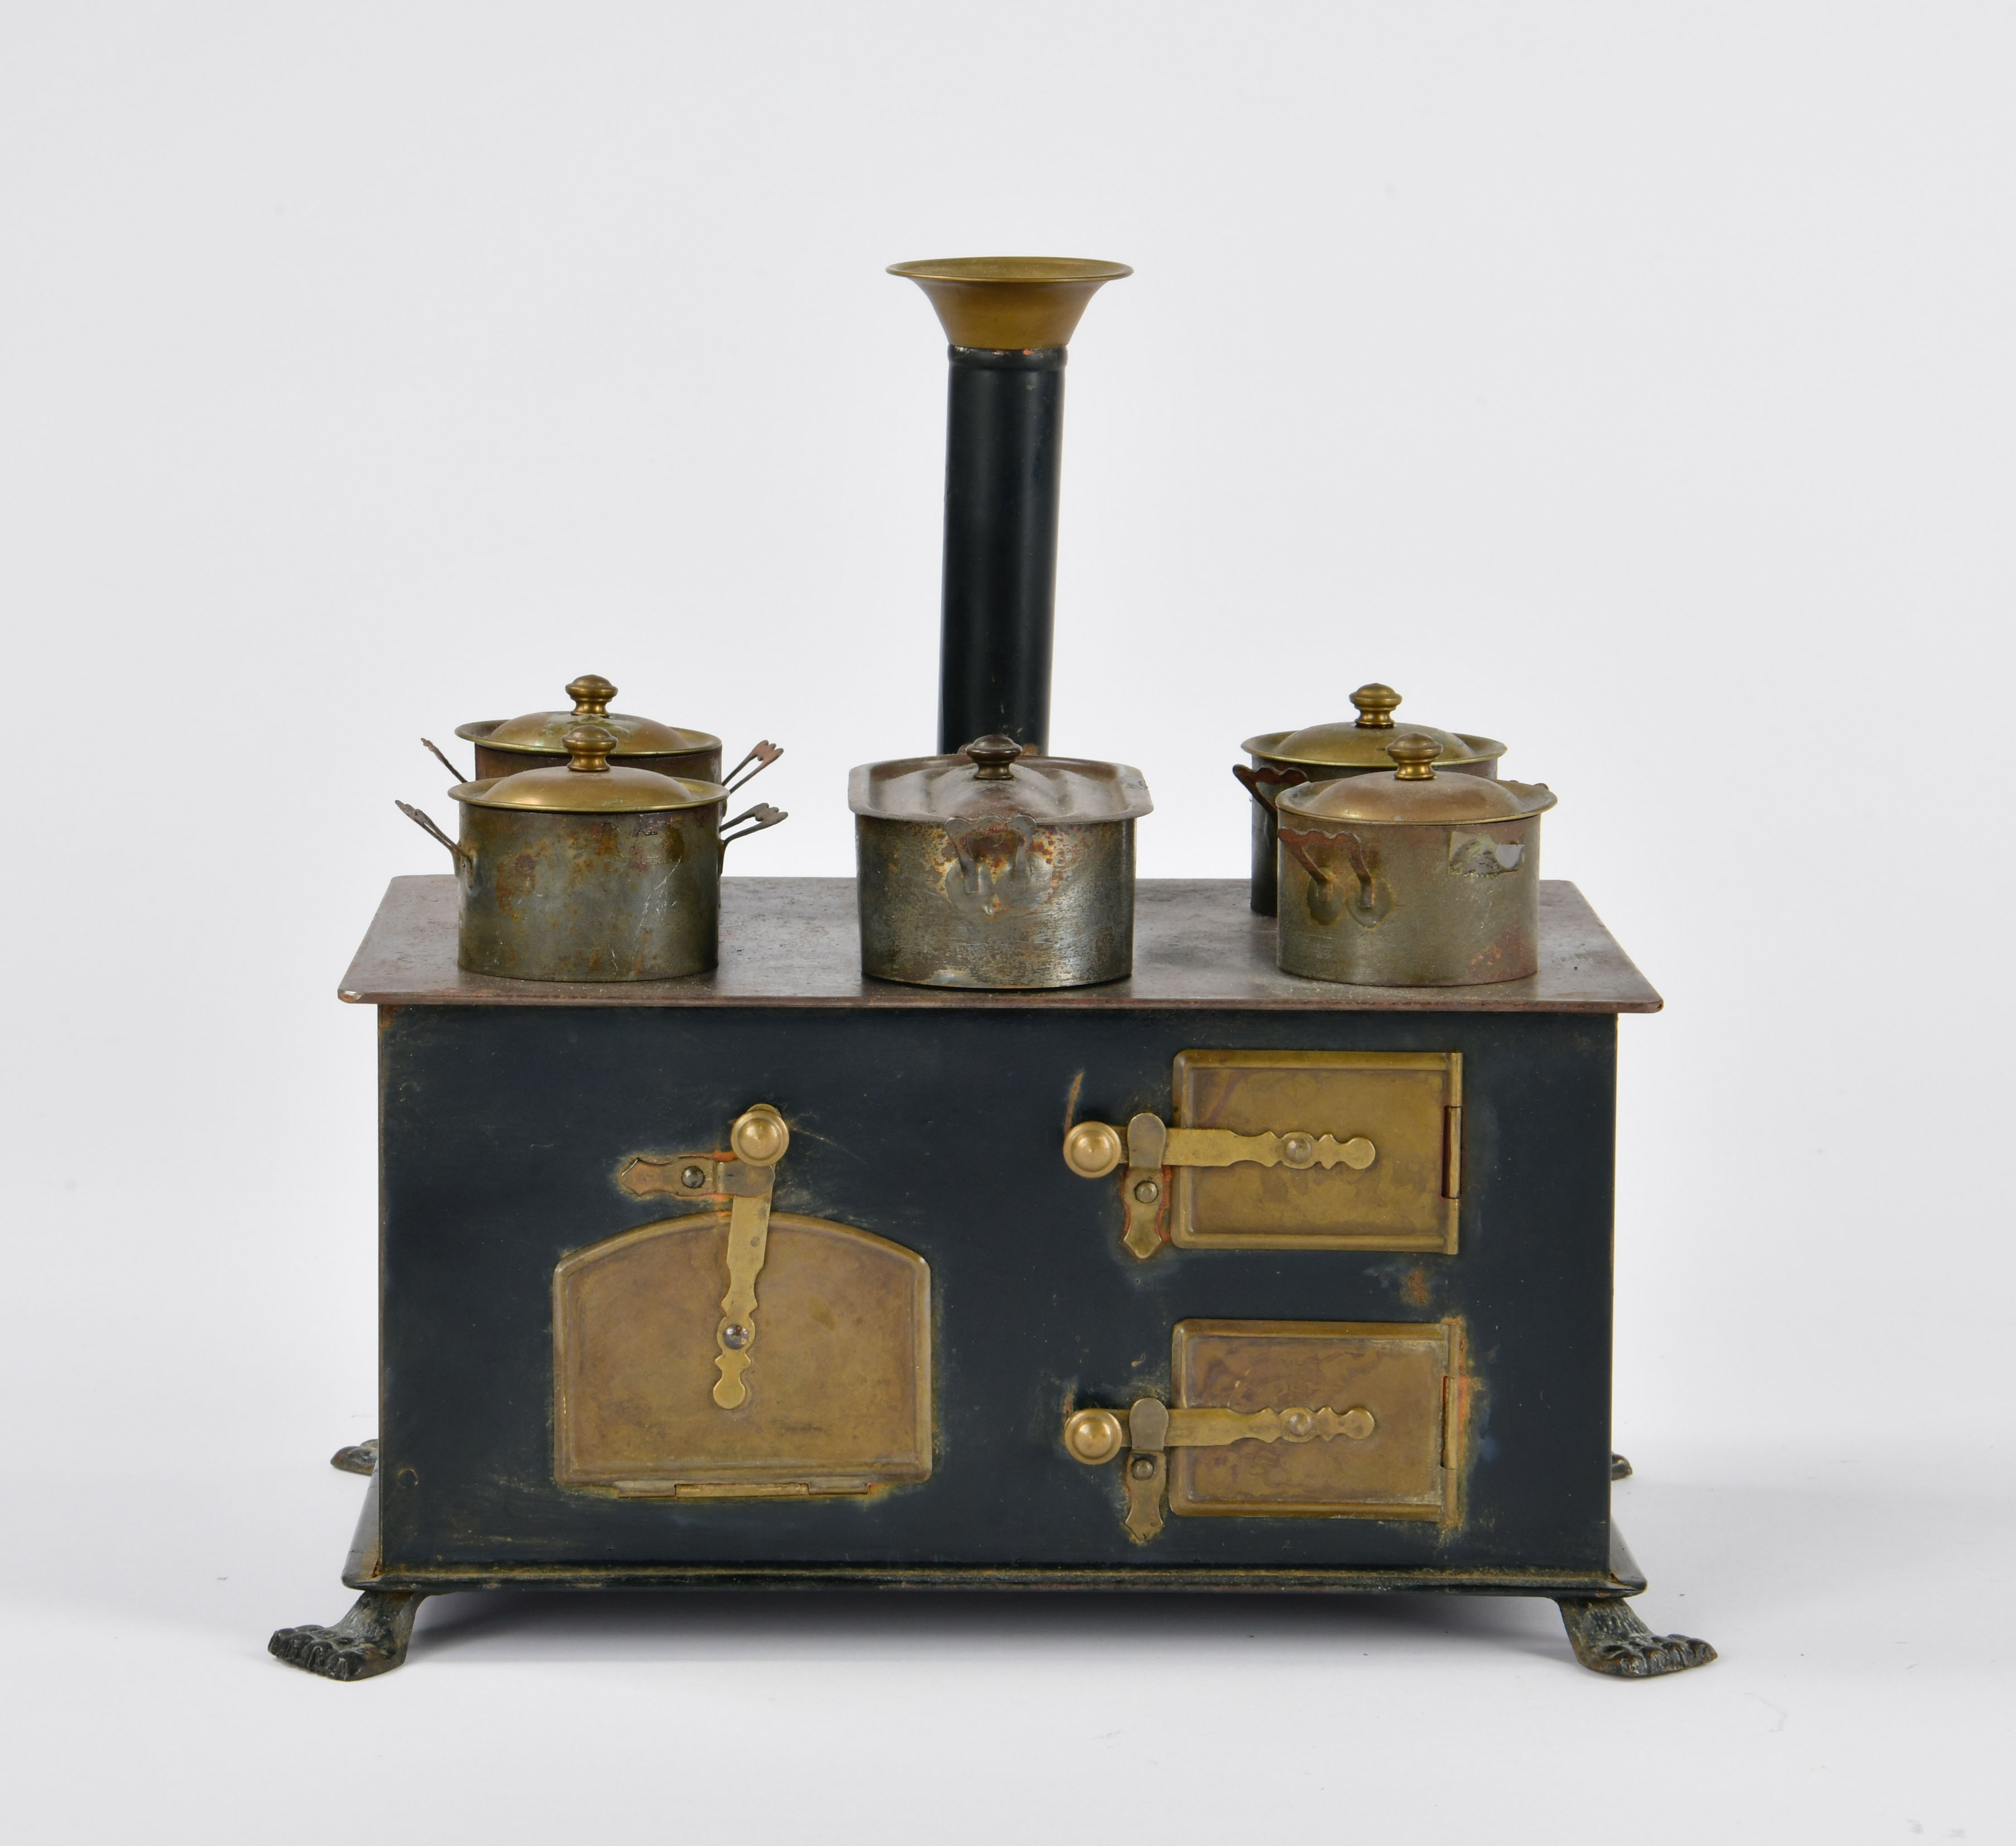 Children's cooker, pw, 20x12 cm, tin, min. rust d., C 2+ - Image 2 of 2